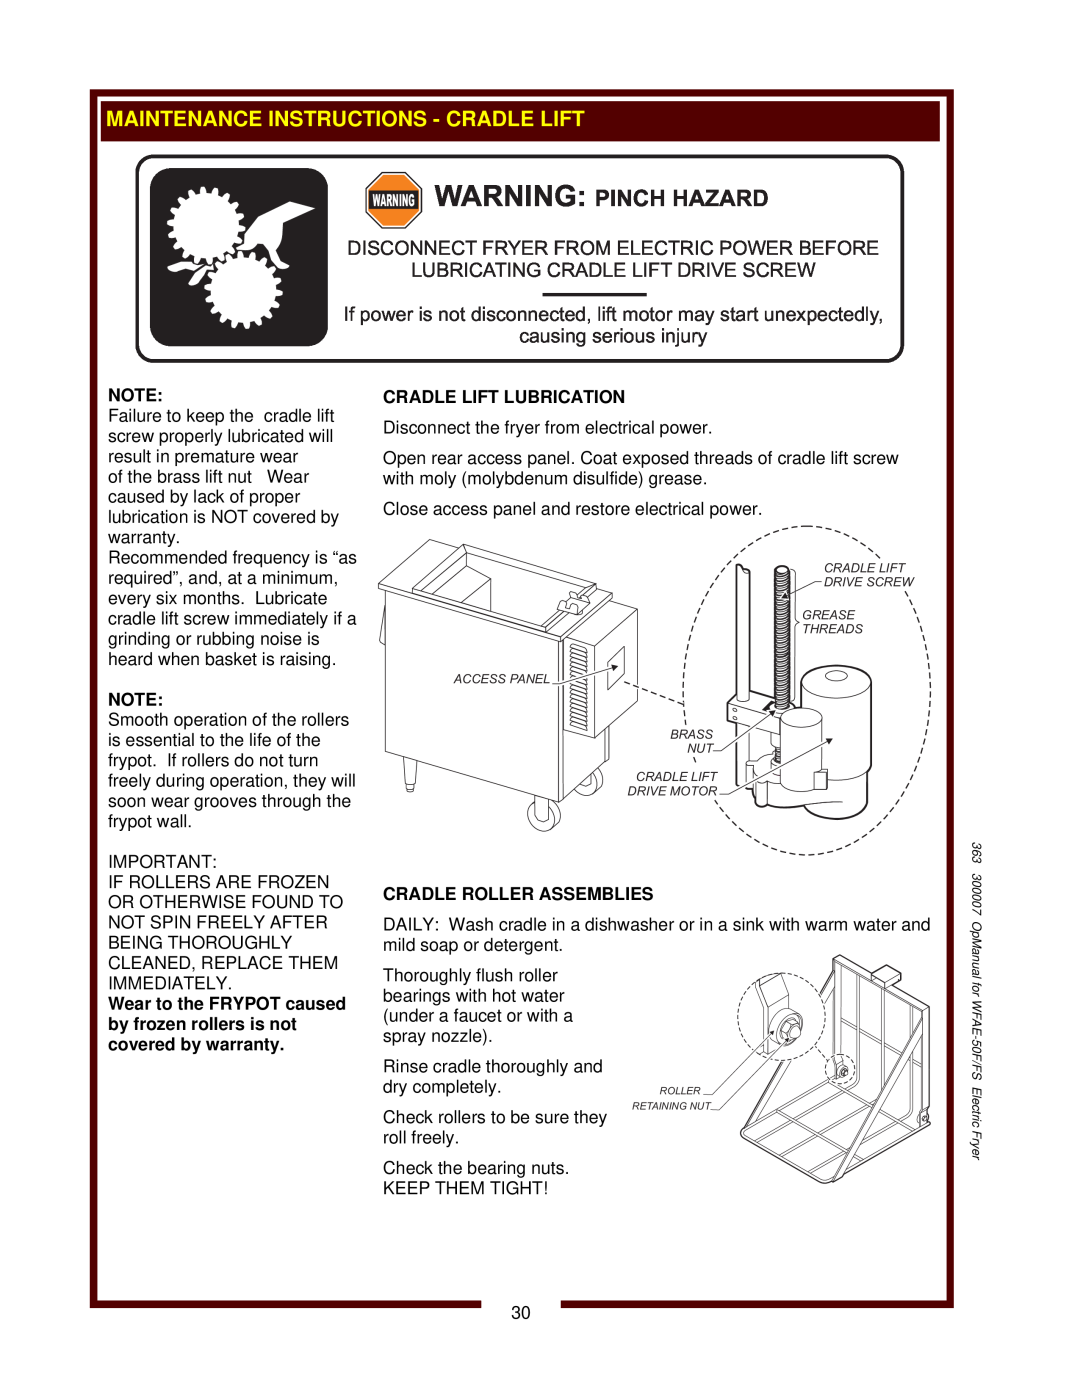 Wells WFAE-55F Warningwarning Pinch Hazard, Maintenance Instructions - Cradle Lift, Lubricating Cradle Lift Drive Screw 